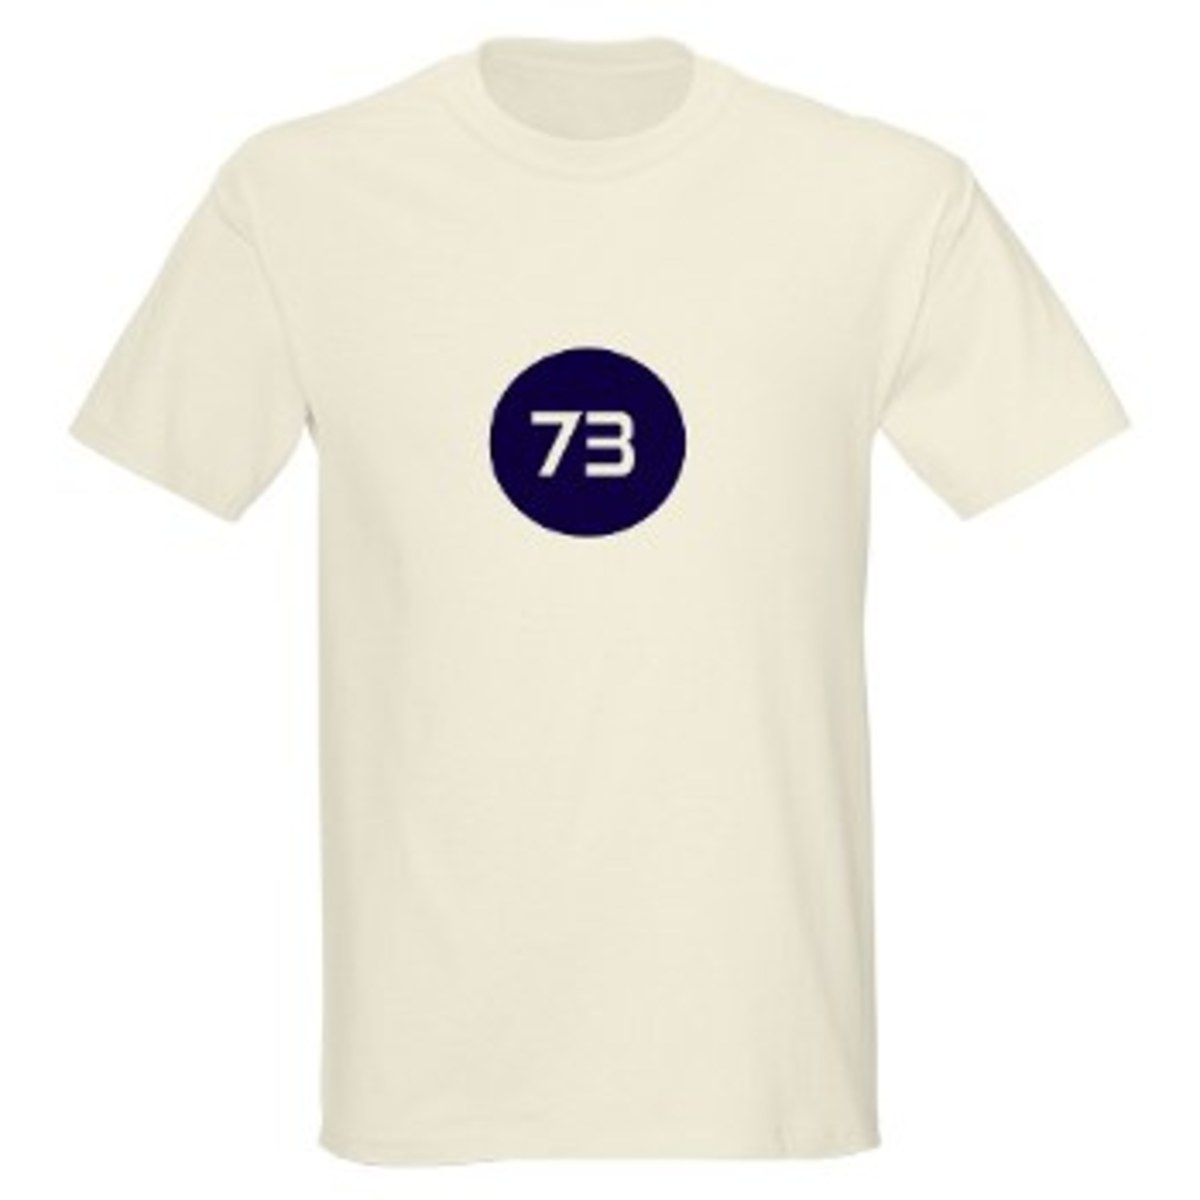 sheldons-73-shirt-73-on-sheldons-shirt